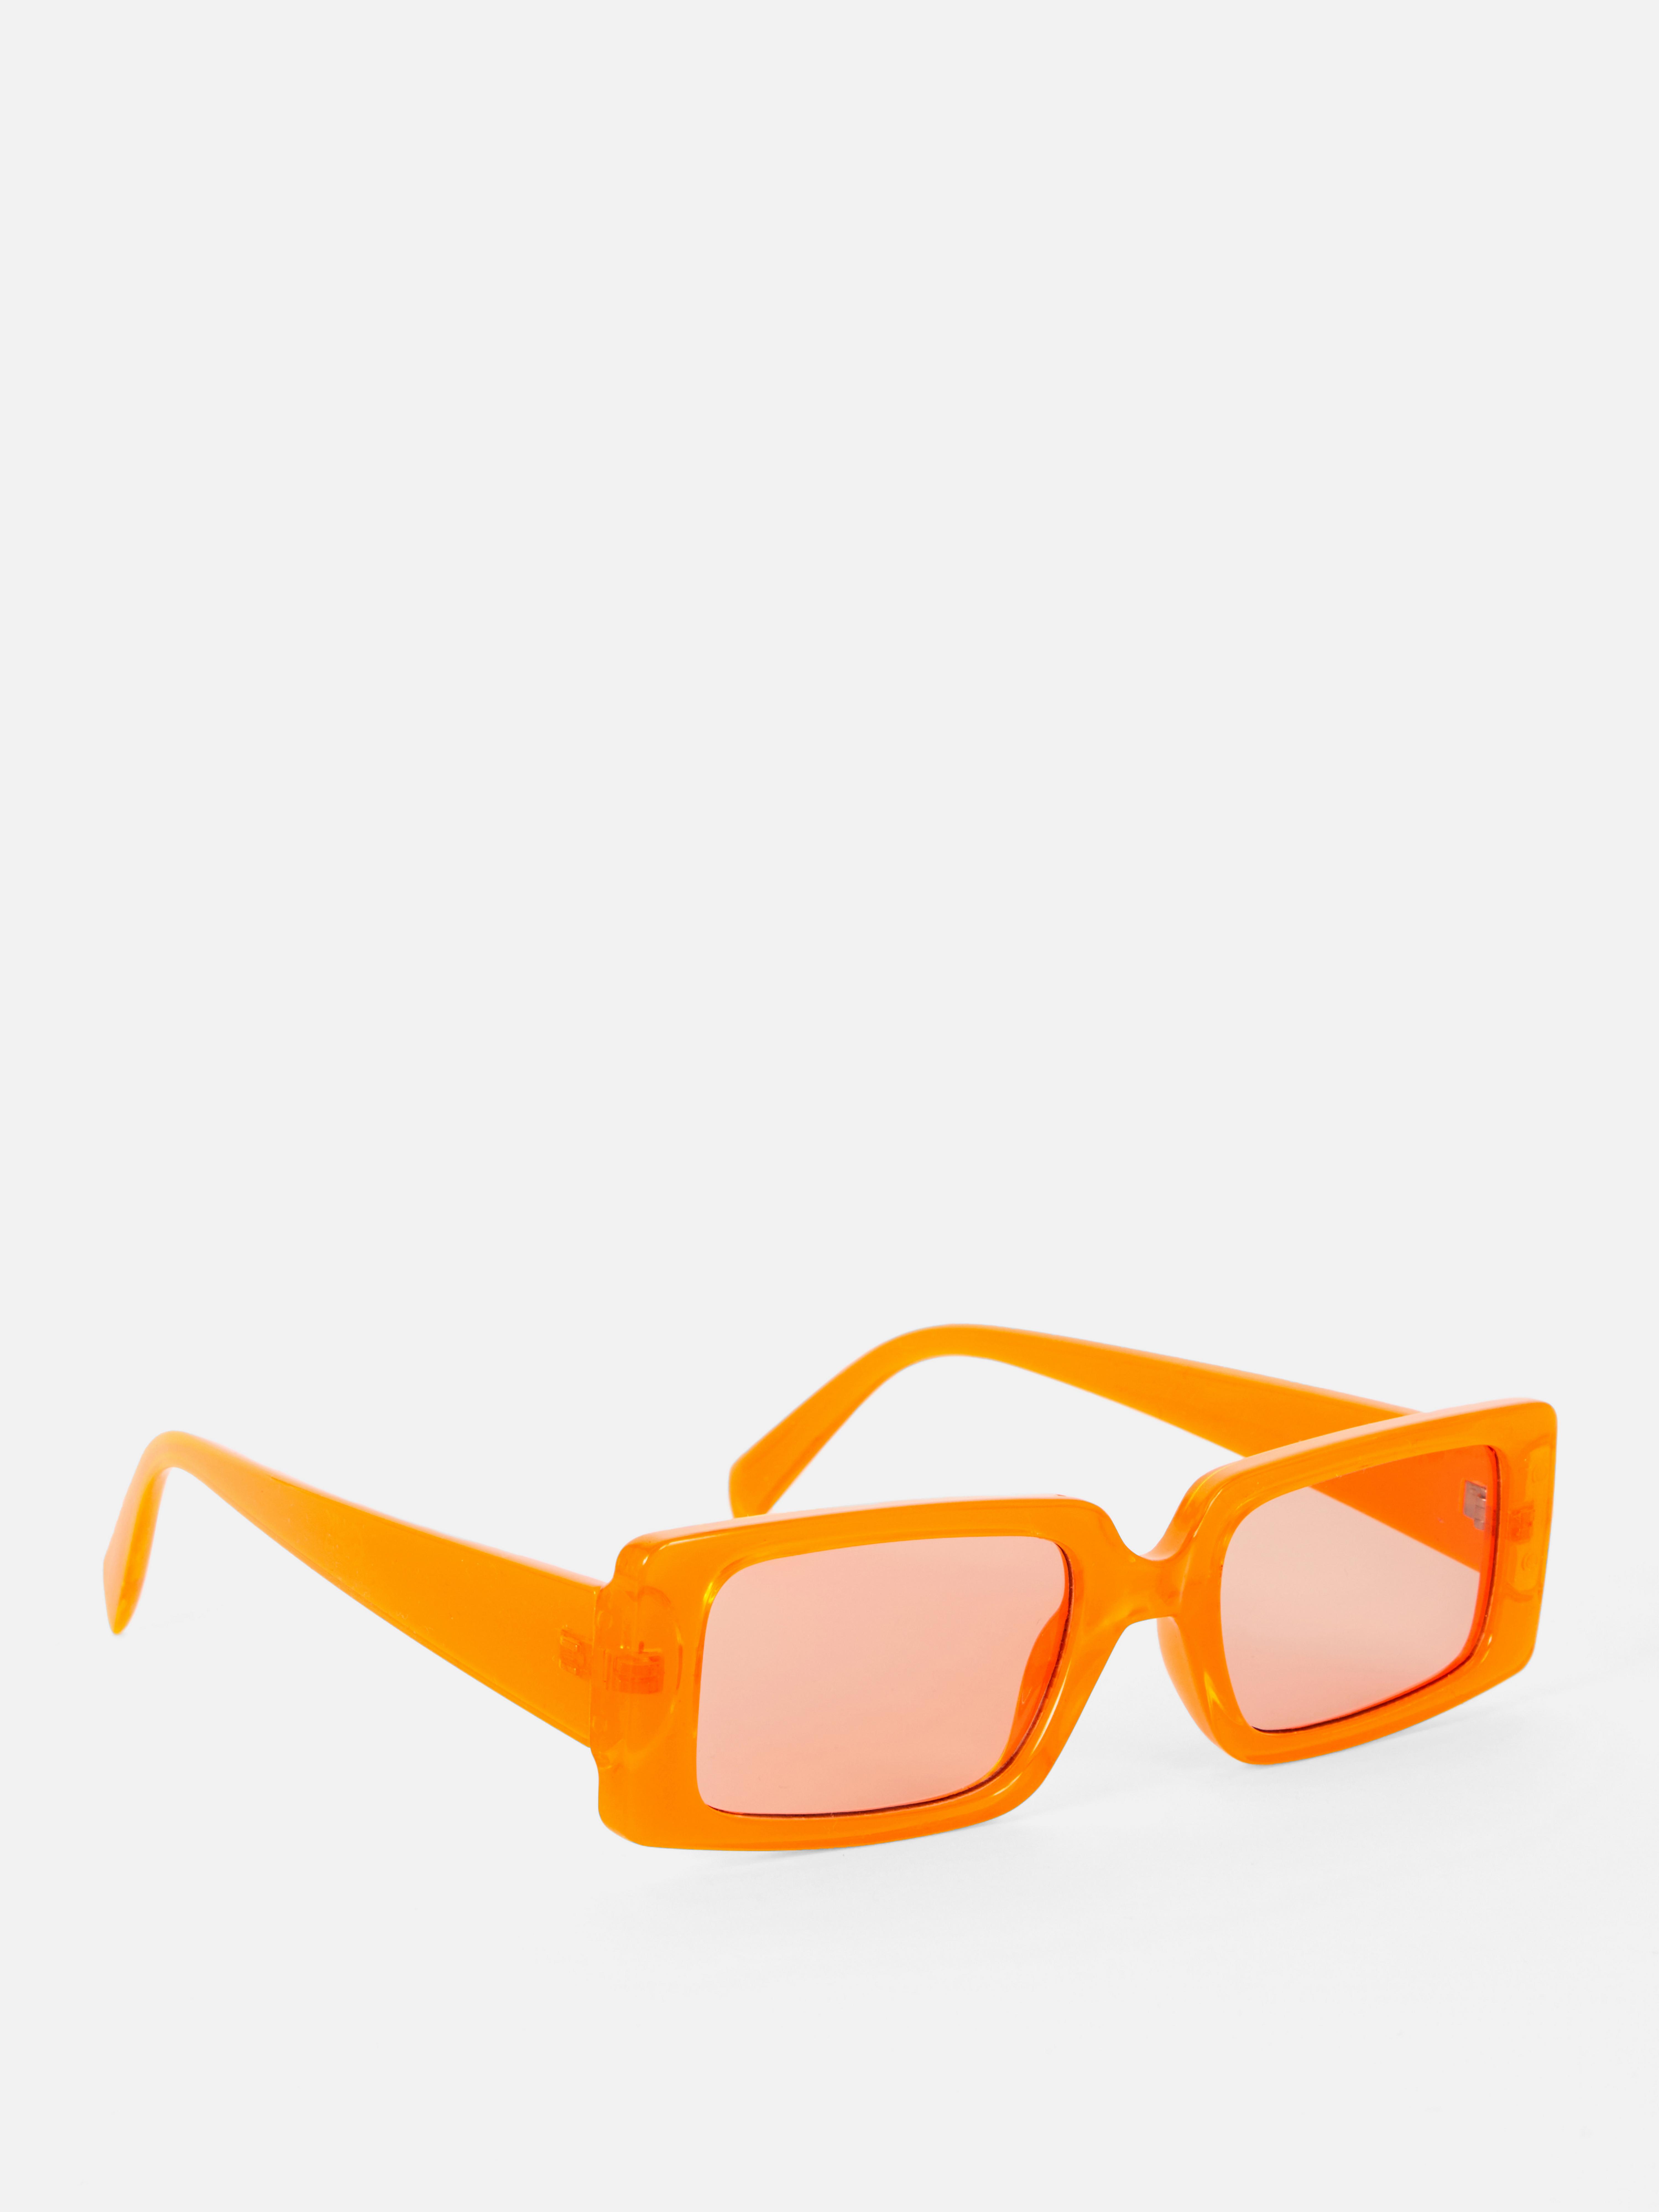 Tinted Lens Fashion Sunglasses